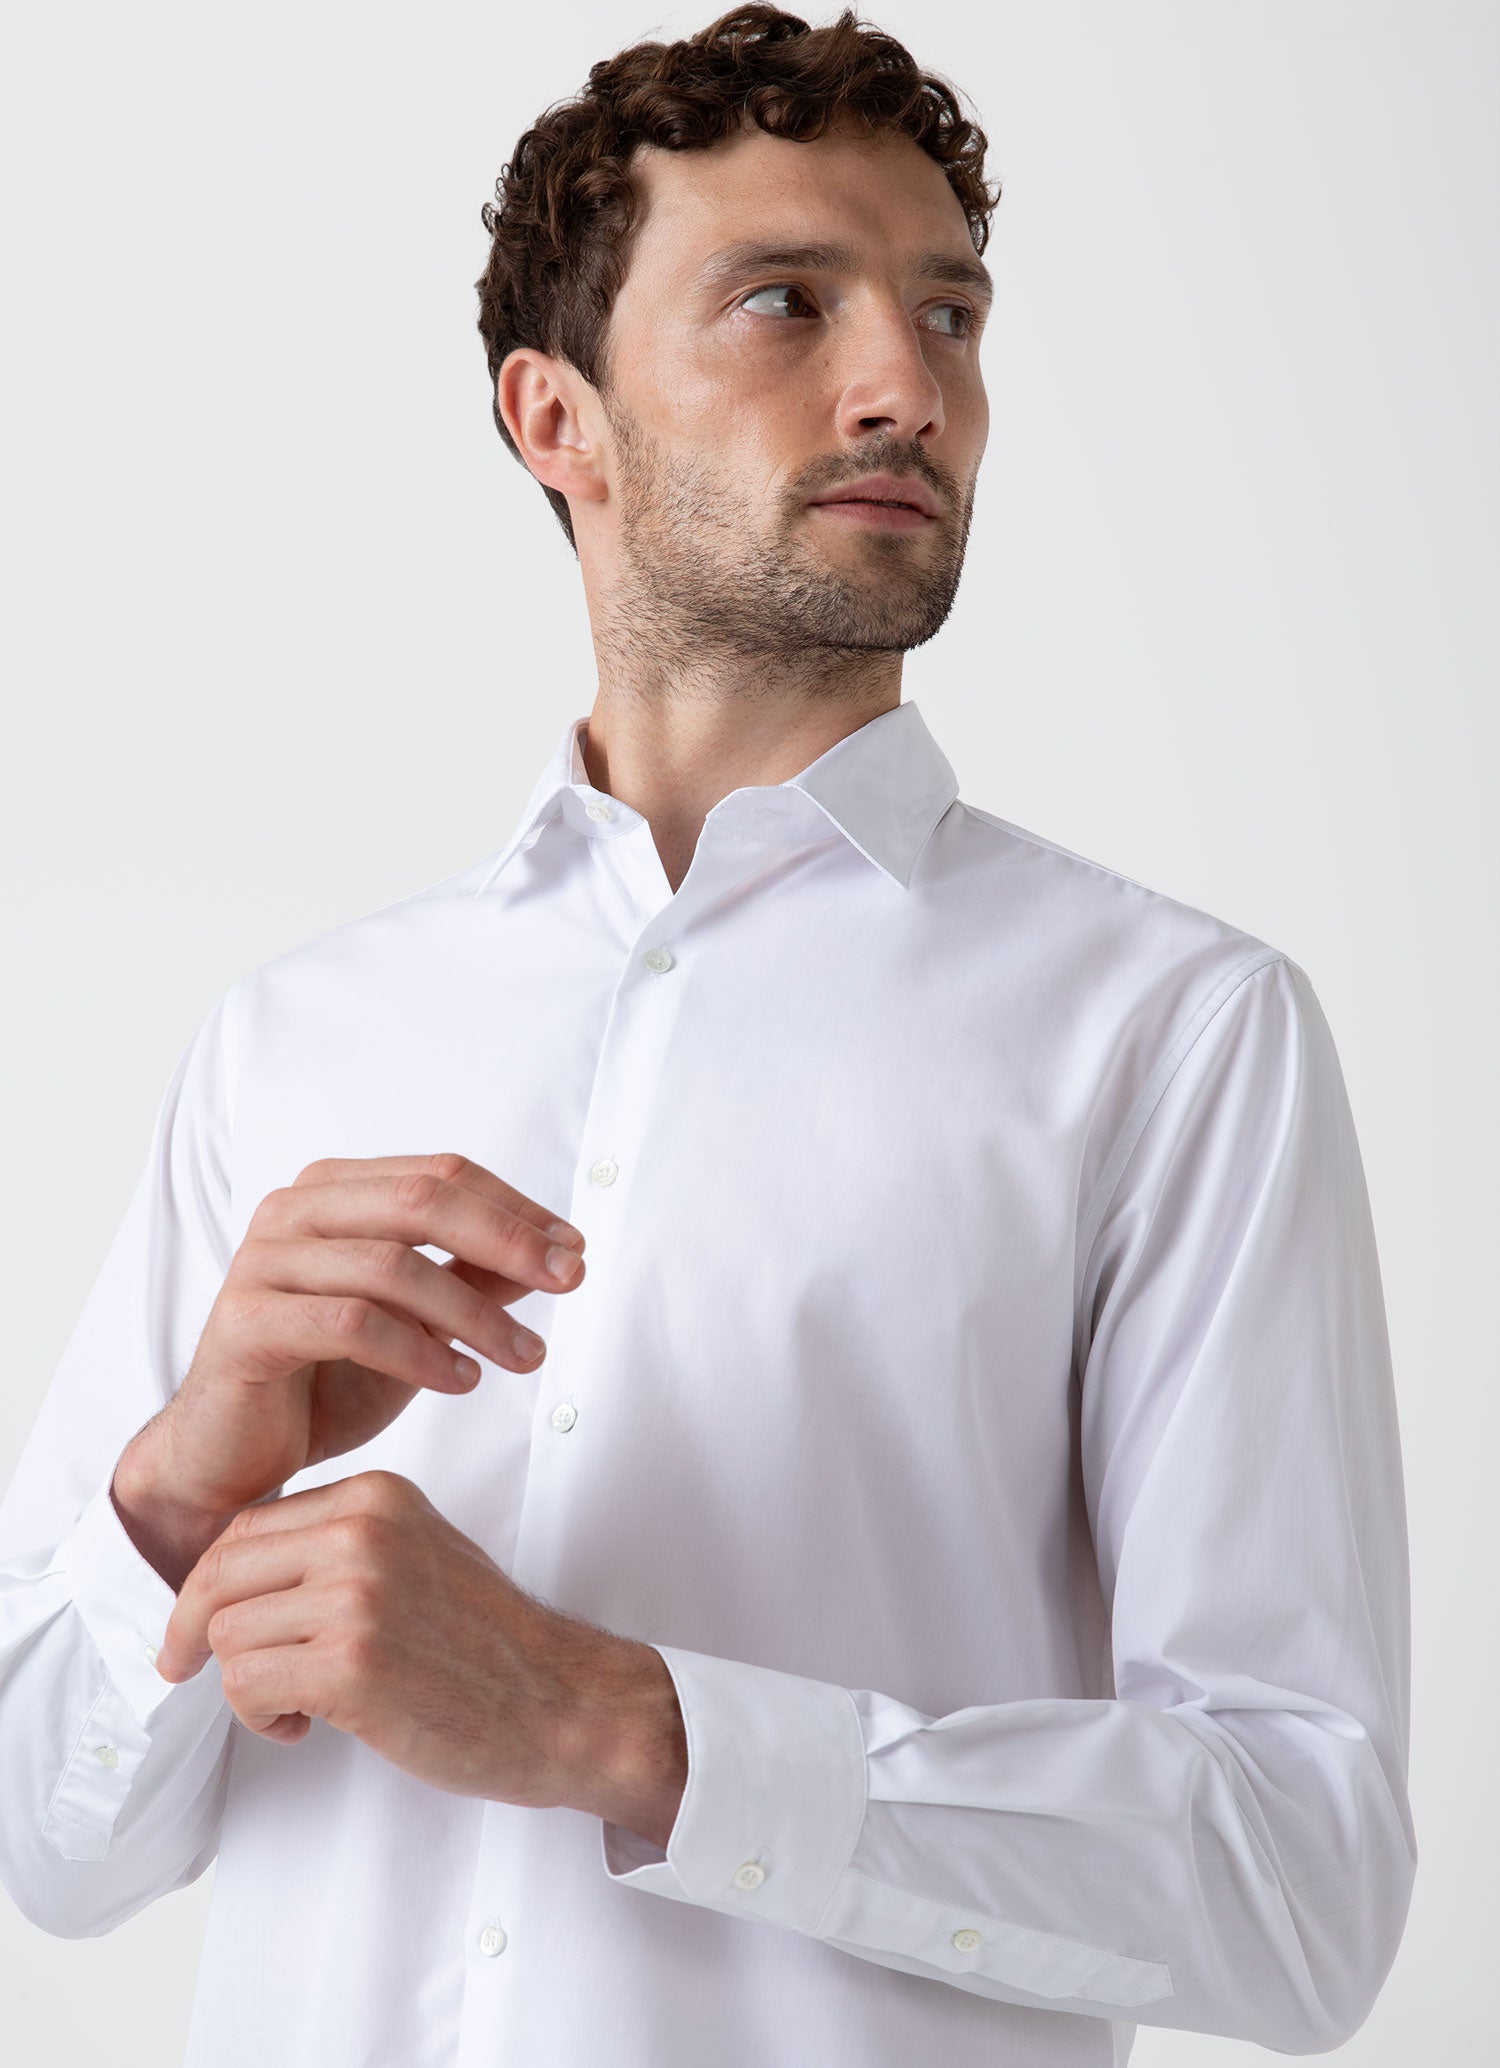 Men's Sea Island Cotton Smart Shirt in White | Sunspel